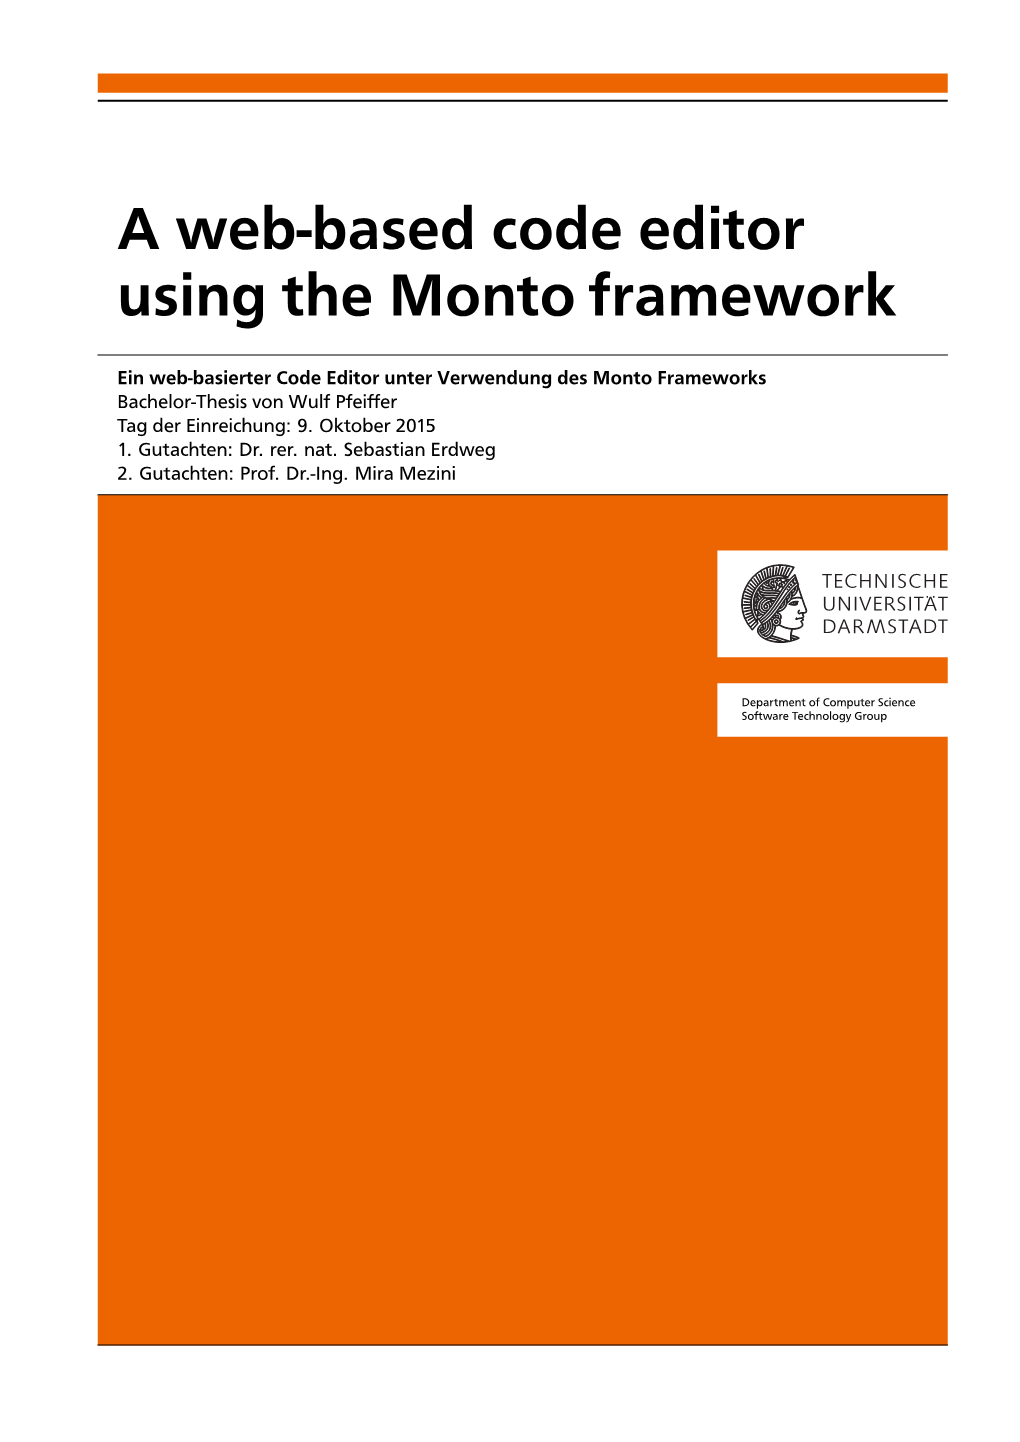 A Web-Based Code Editor Using the Monto Framework